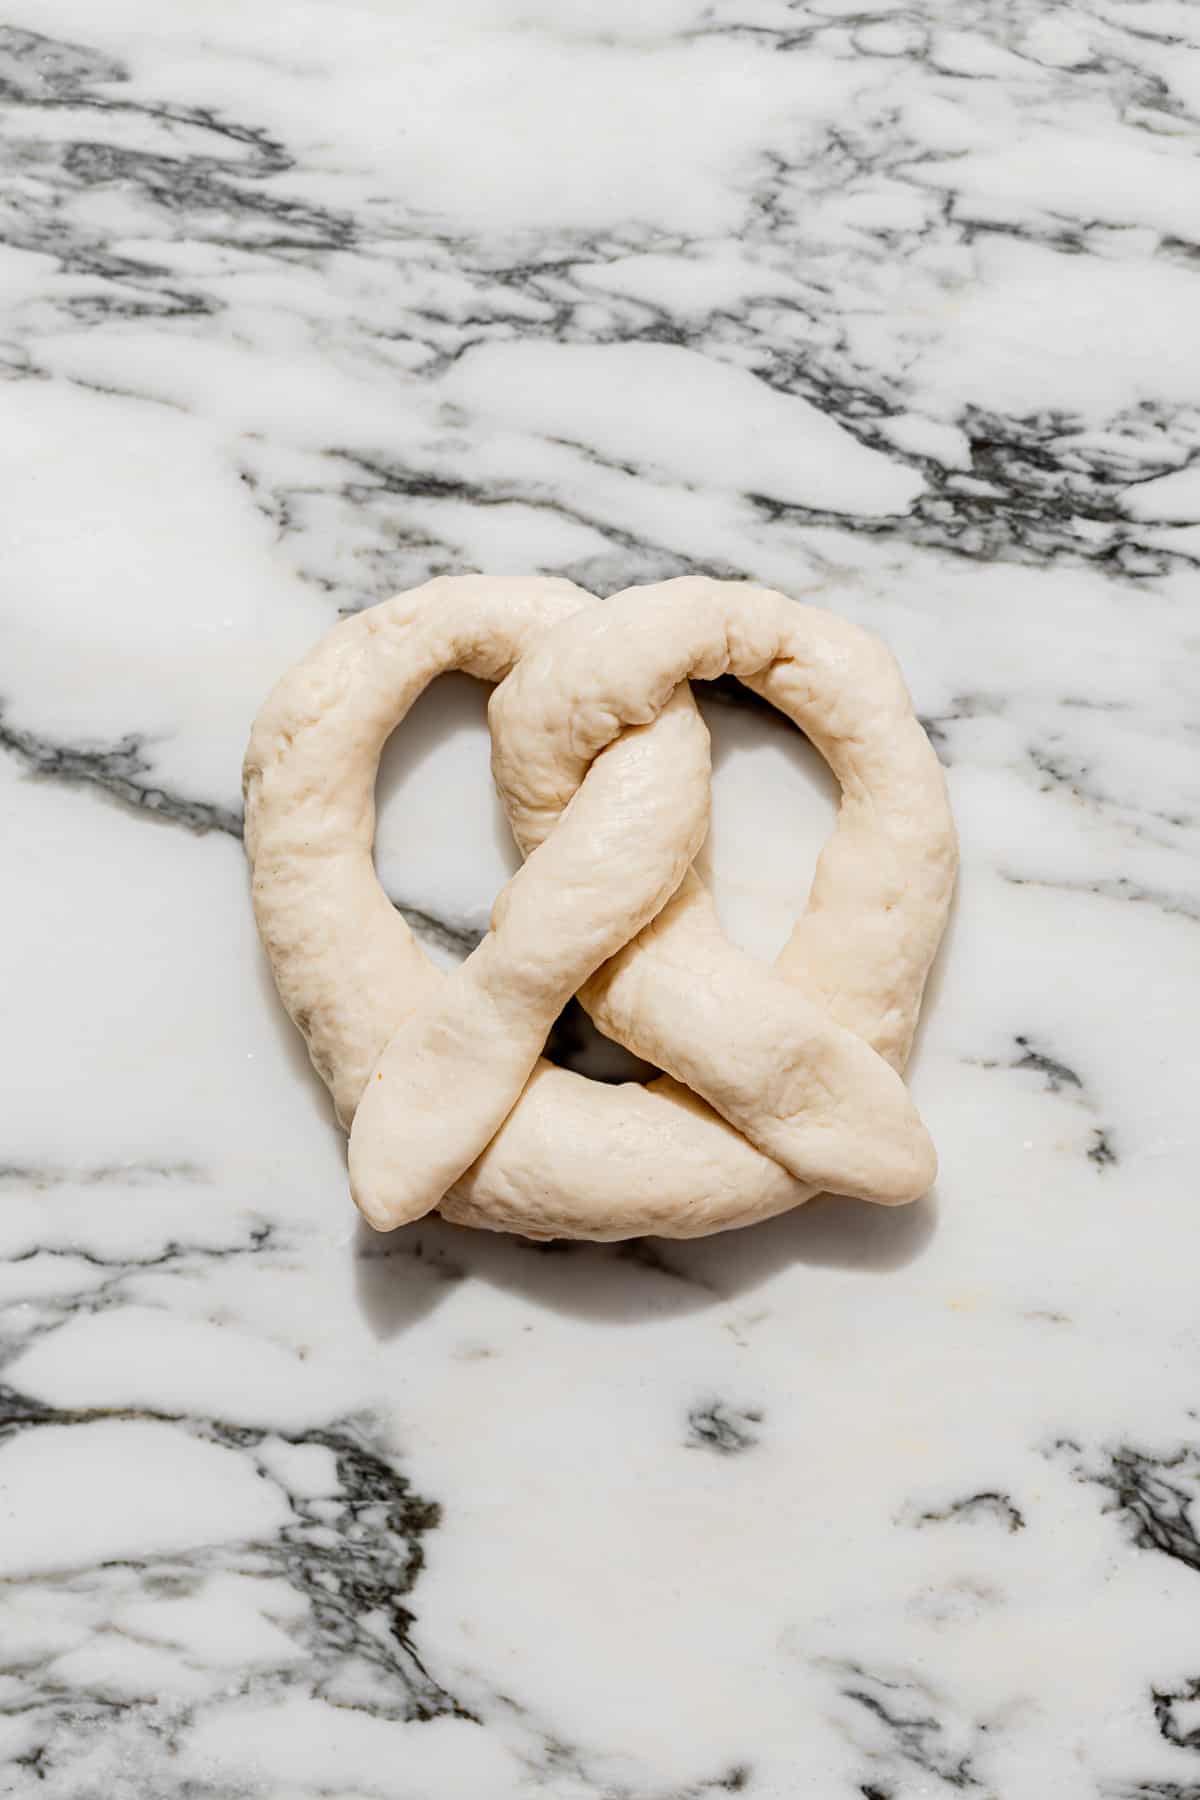 pretzel dough being shaped.